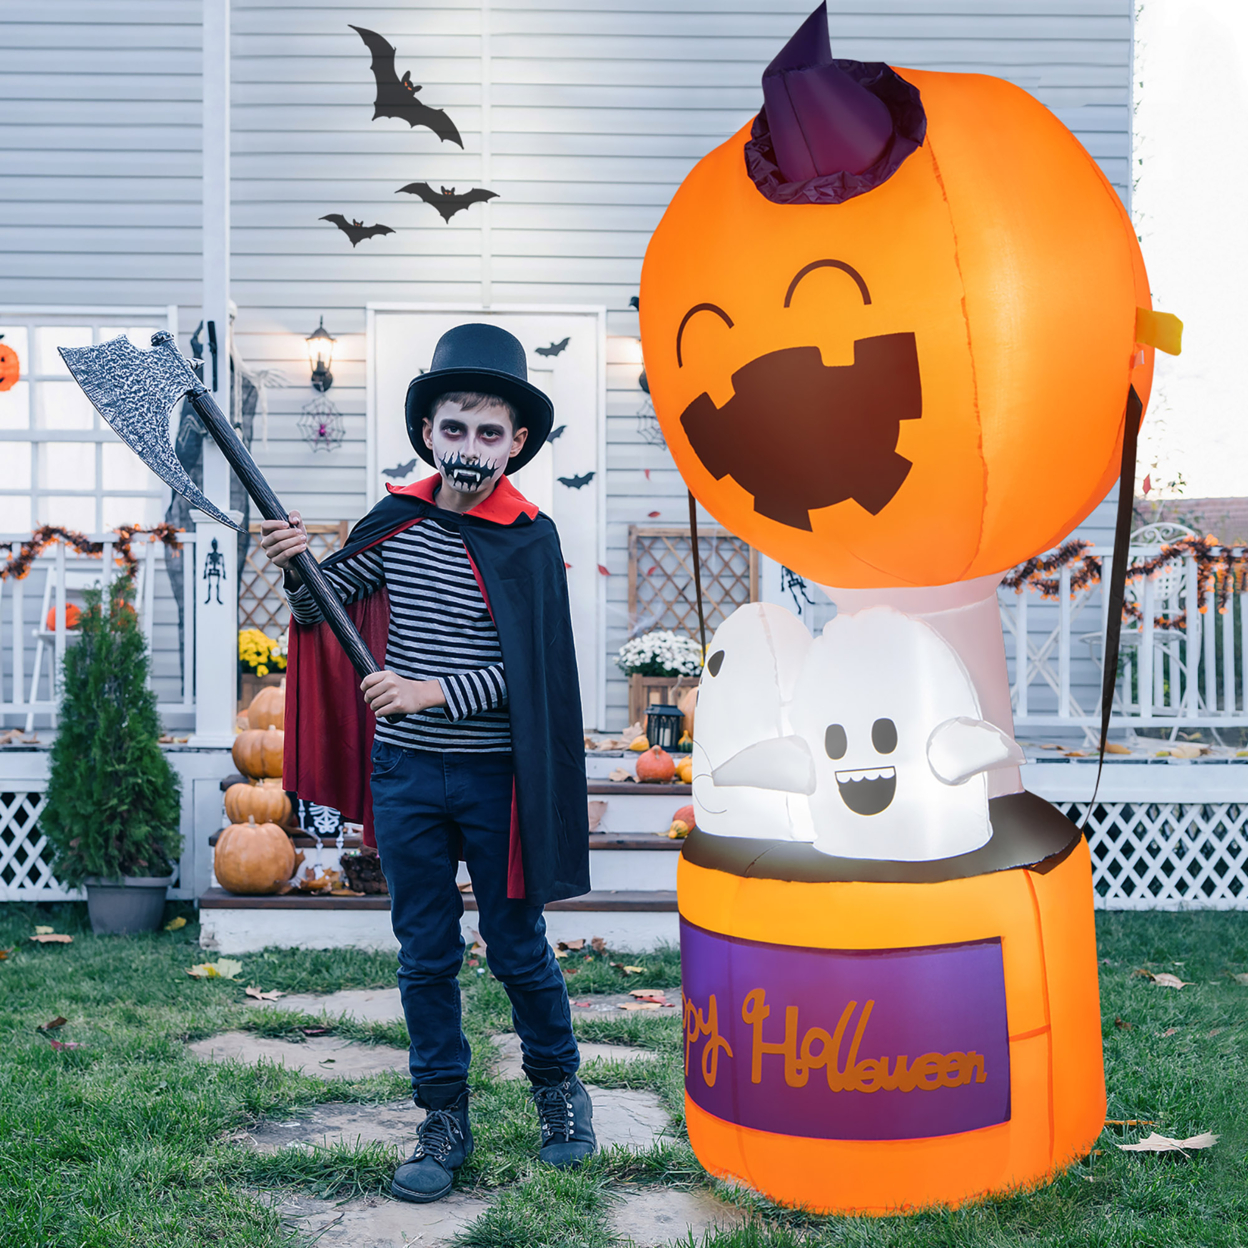 6FT Tall Halloween Ghost Pumpkin Inflatable Hot Air Balloon Decor W/ LED Lights